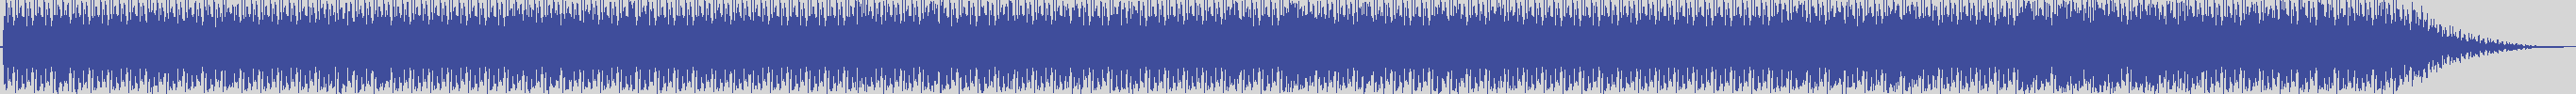 upr [UPR082] Esplendor Geometrico - Disciplines [Original Mix] audio wave form